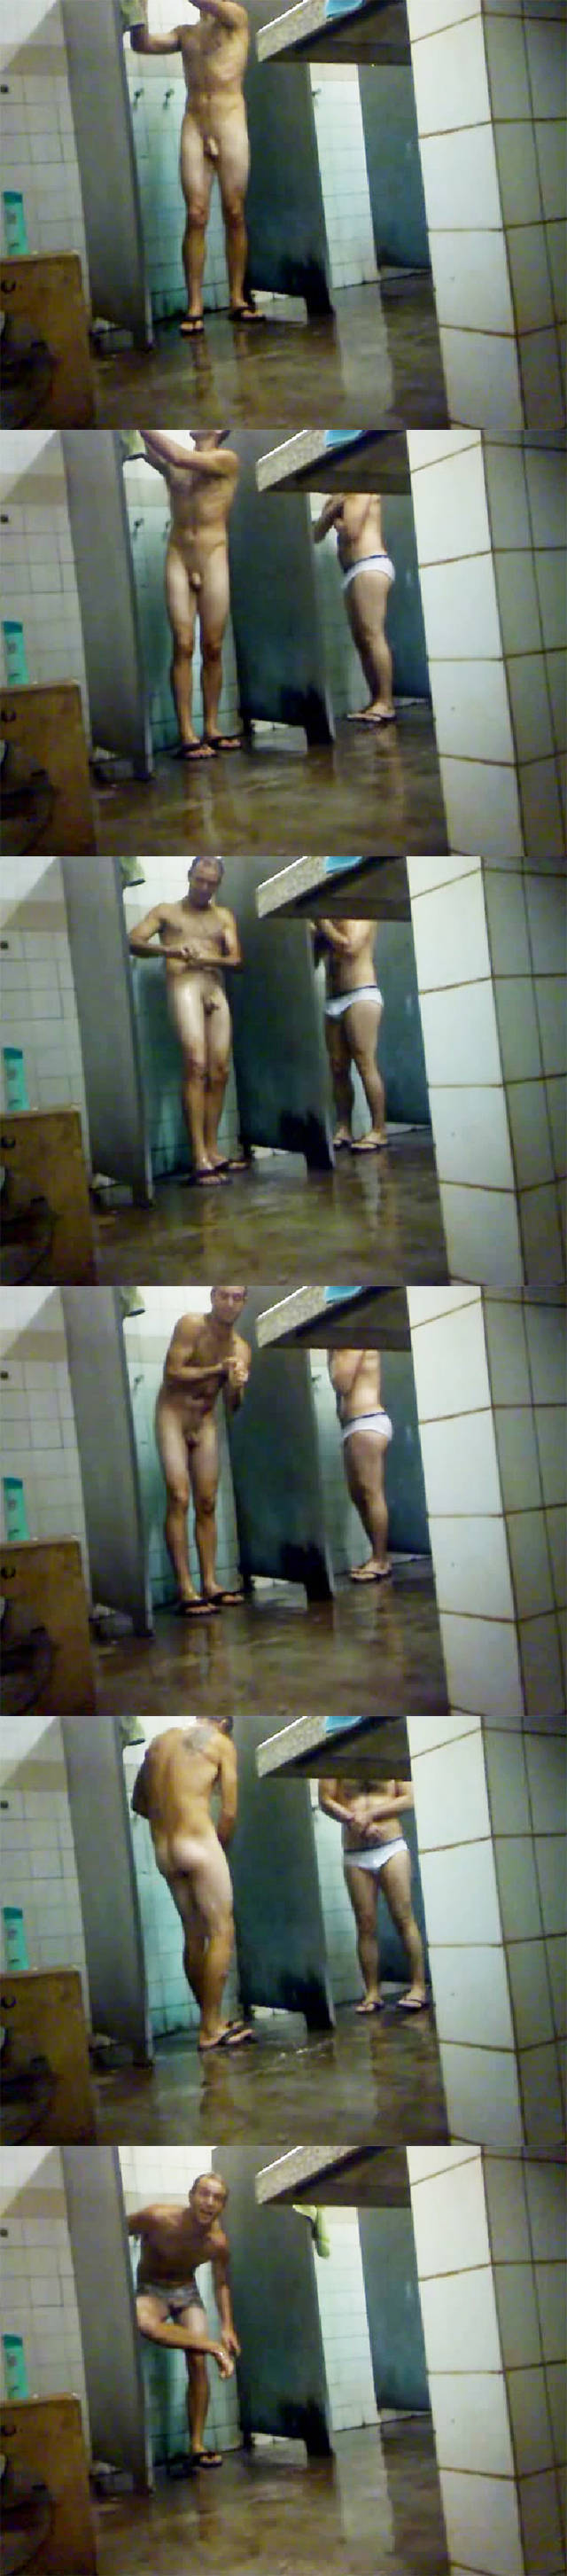 spycam guy caught showering